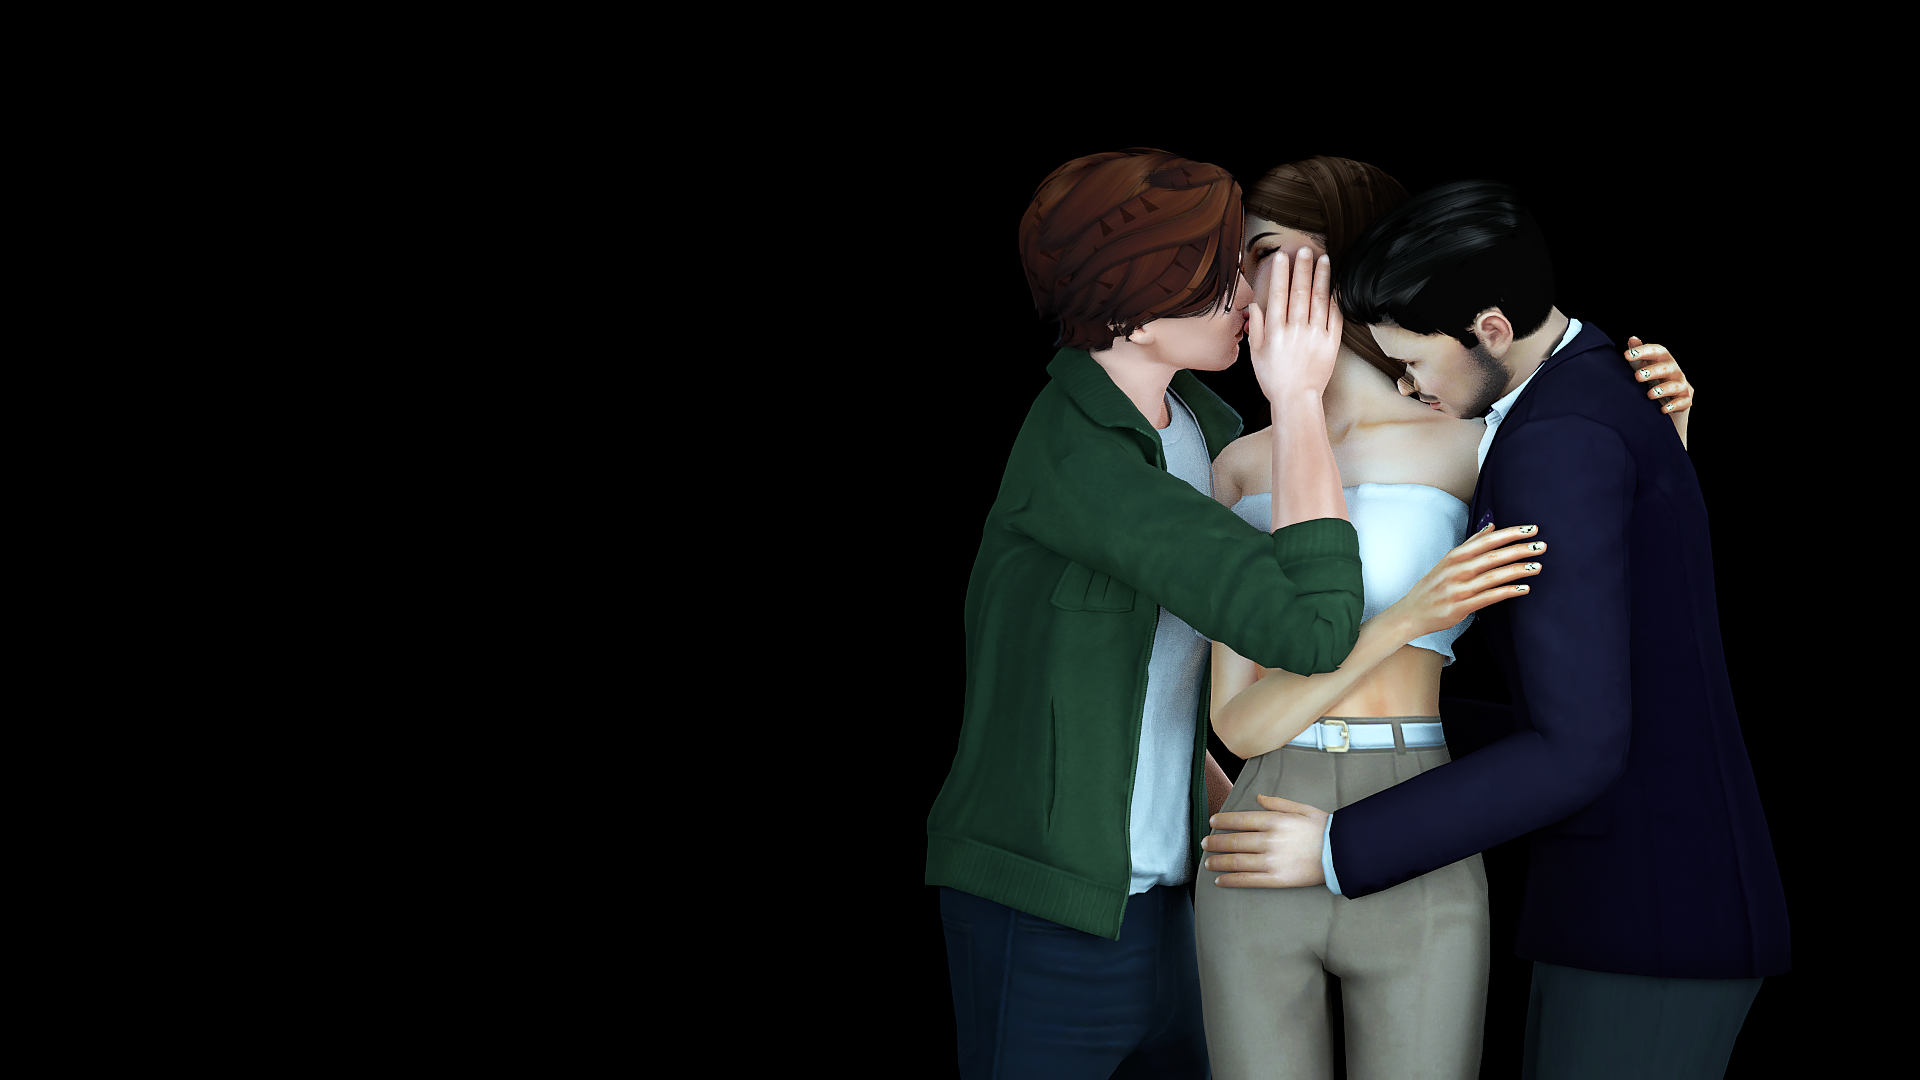 Threesome animation sims 4